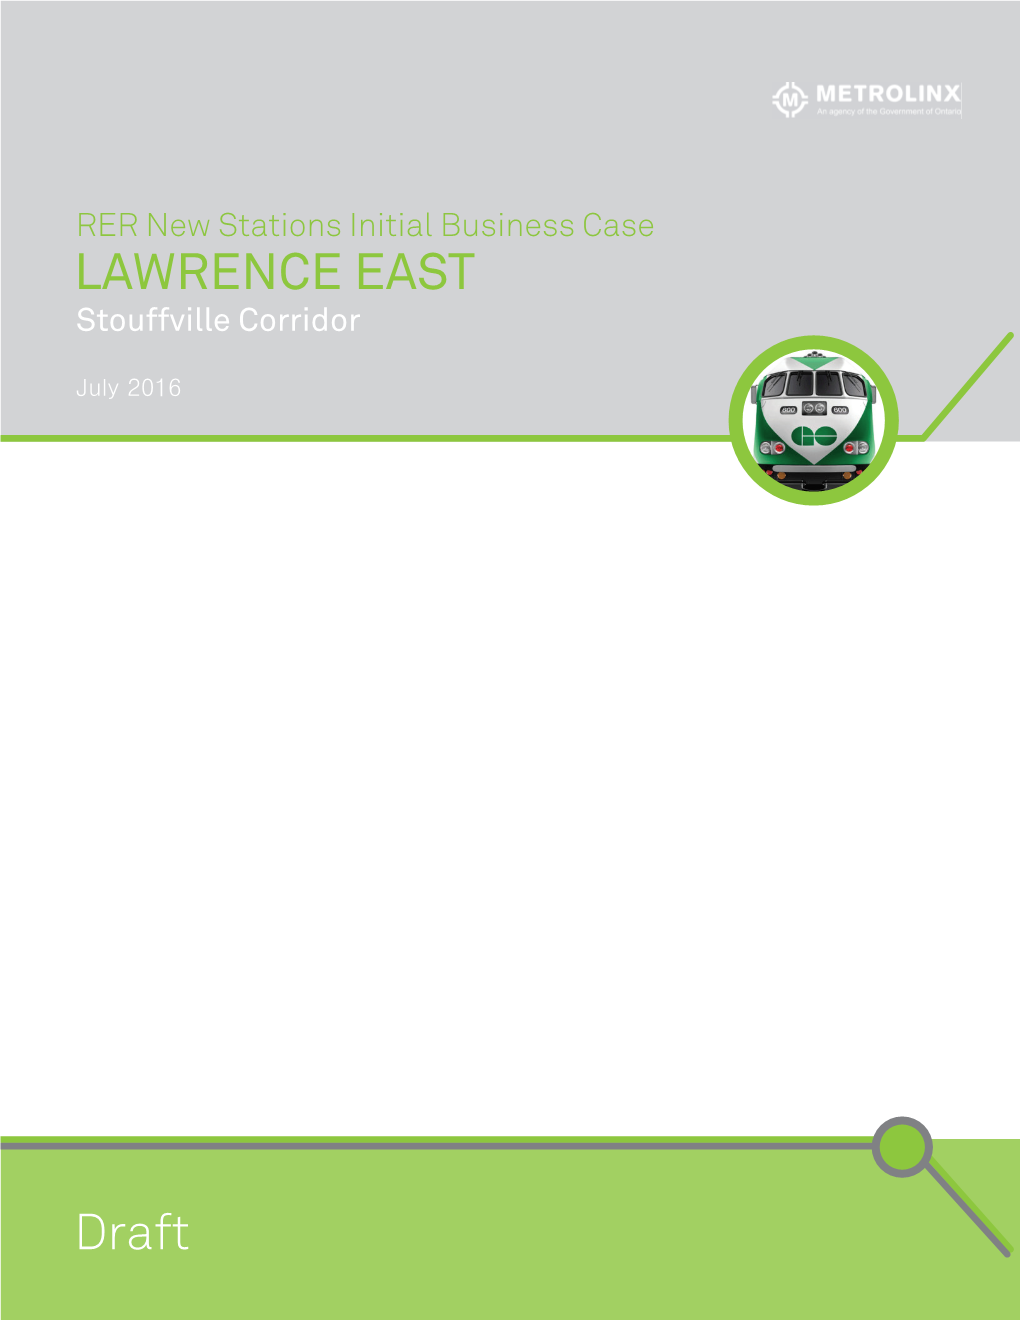 LAWRENCE EAST Stouffville Corridor